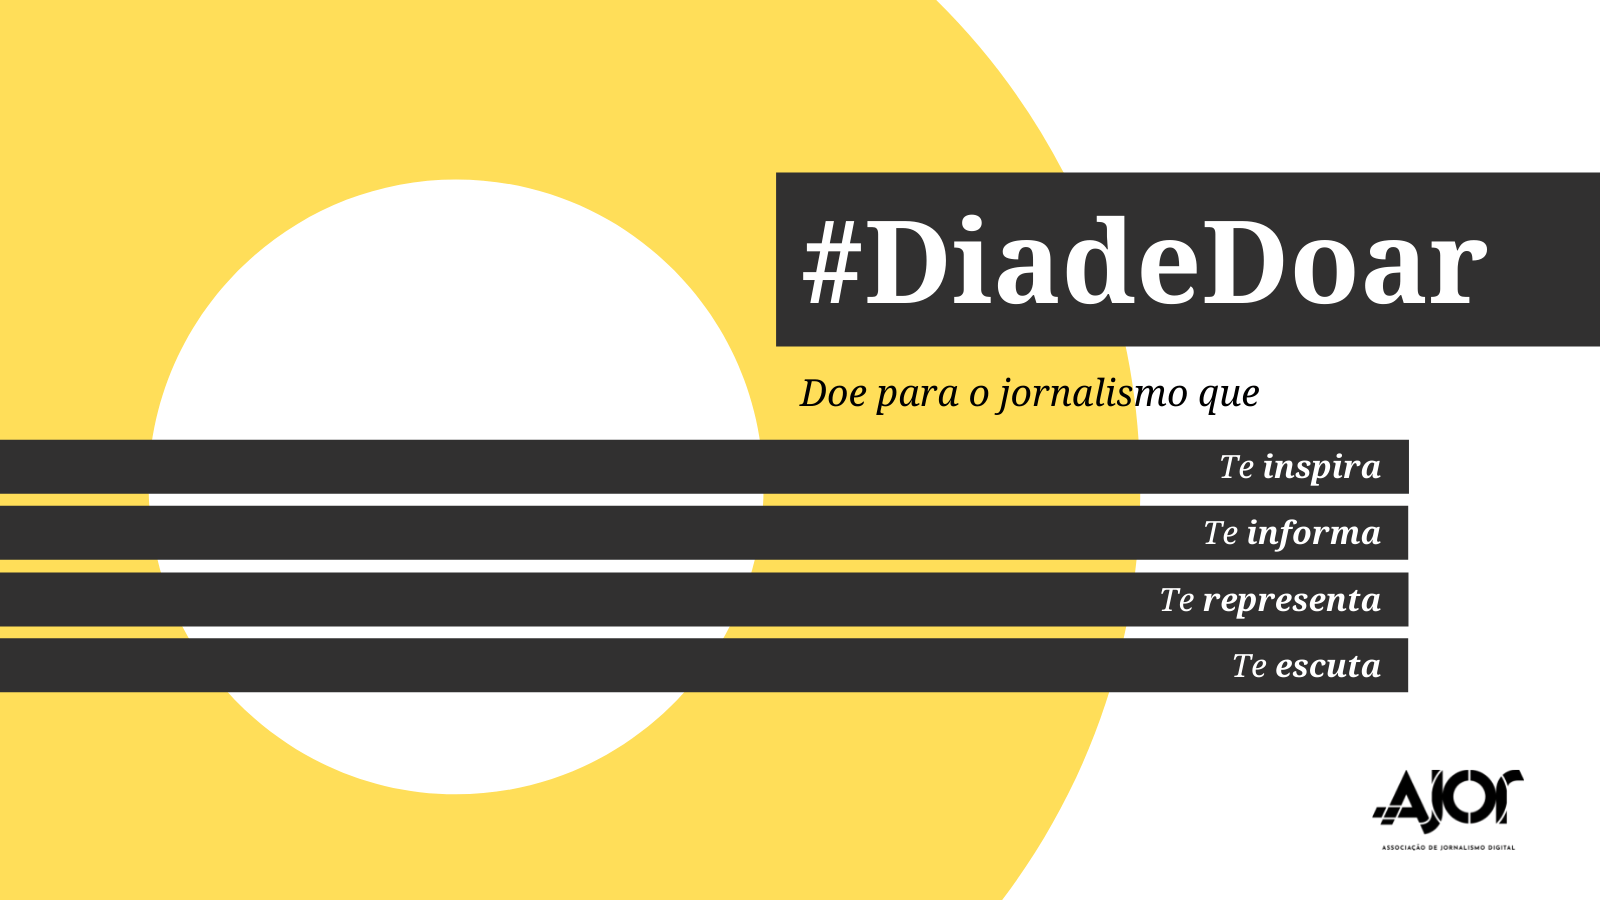 Banner da campanha #DiaDeDoar com o texto "Doe para o jornalismo que te inspira, te informa, te representa, te escuta"